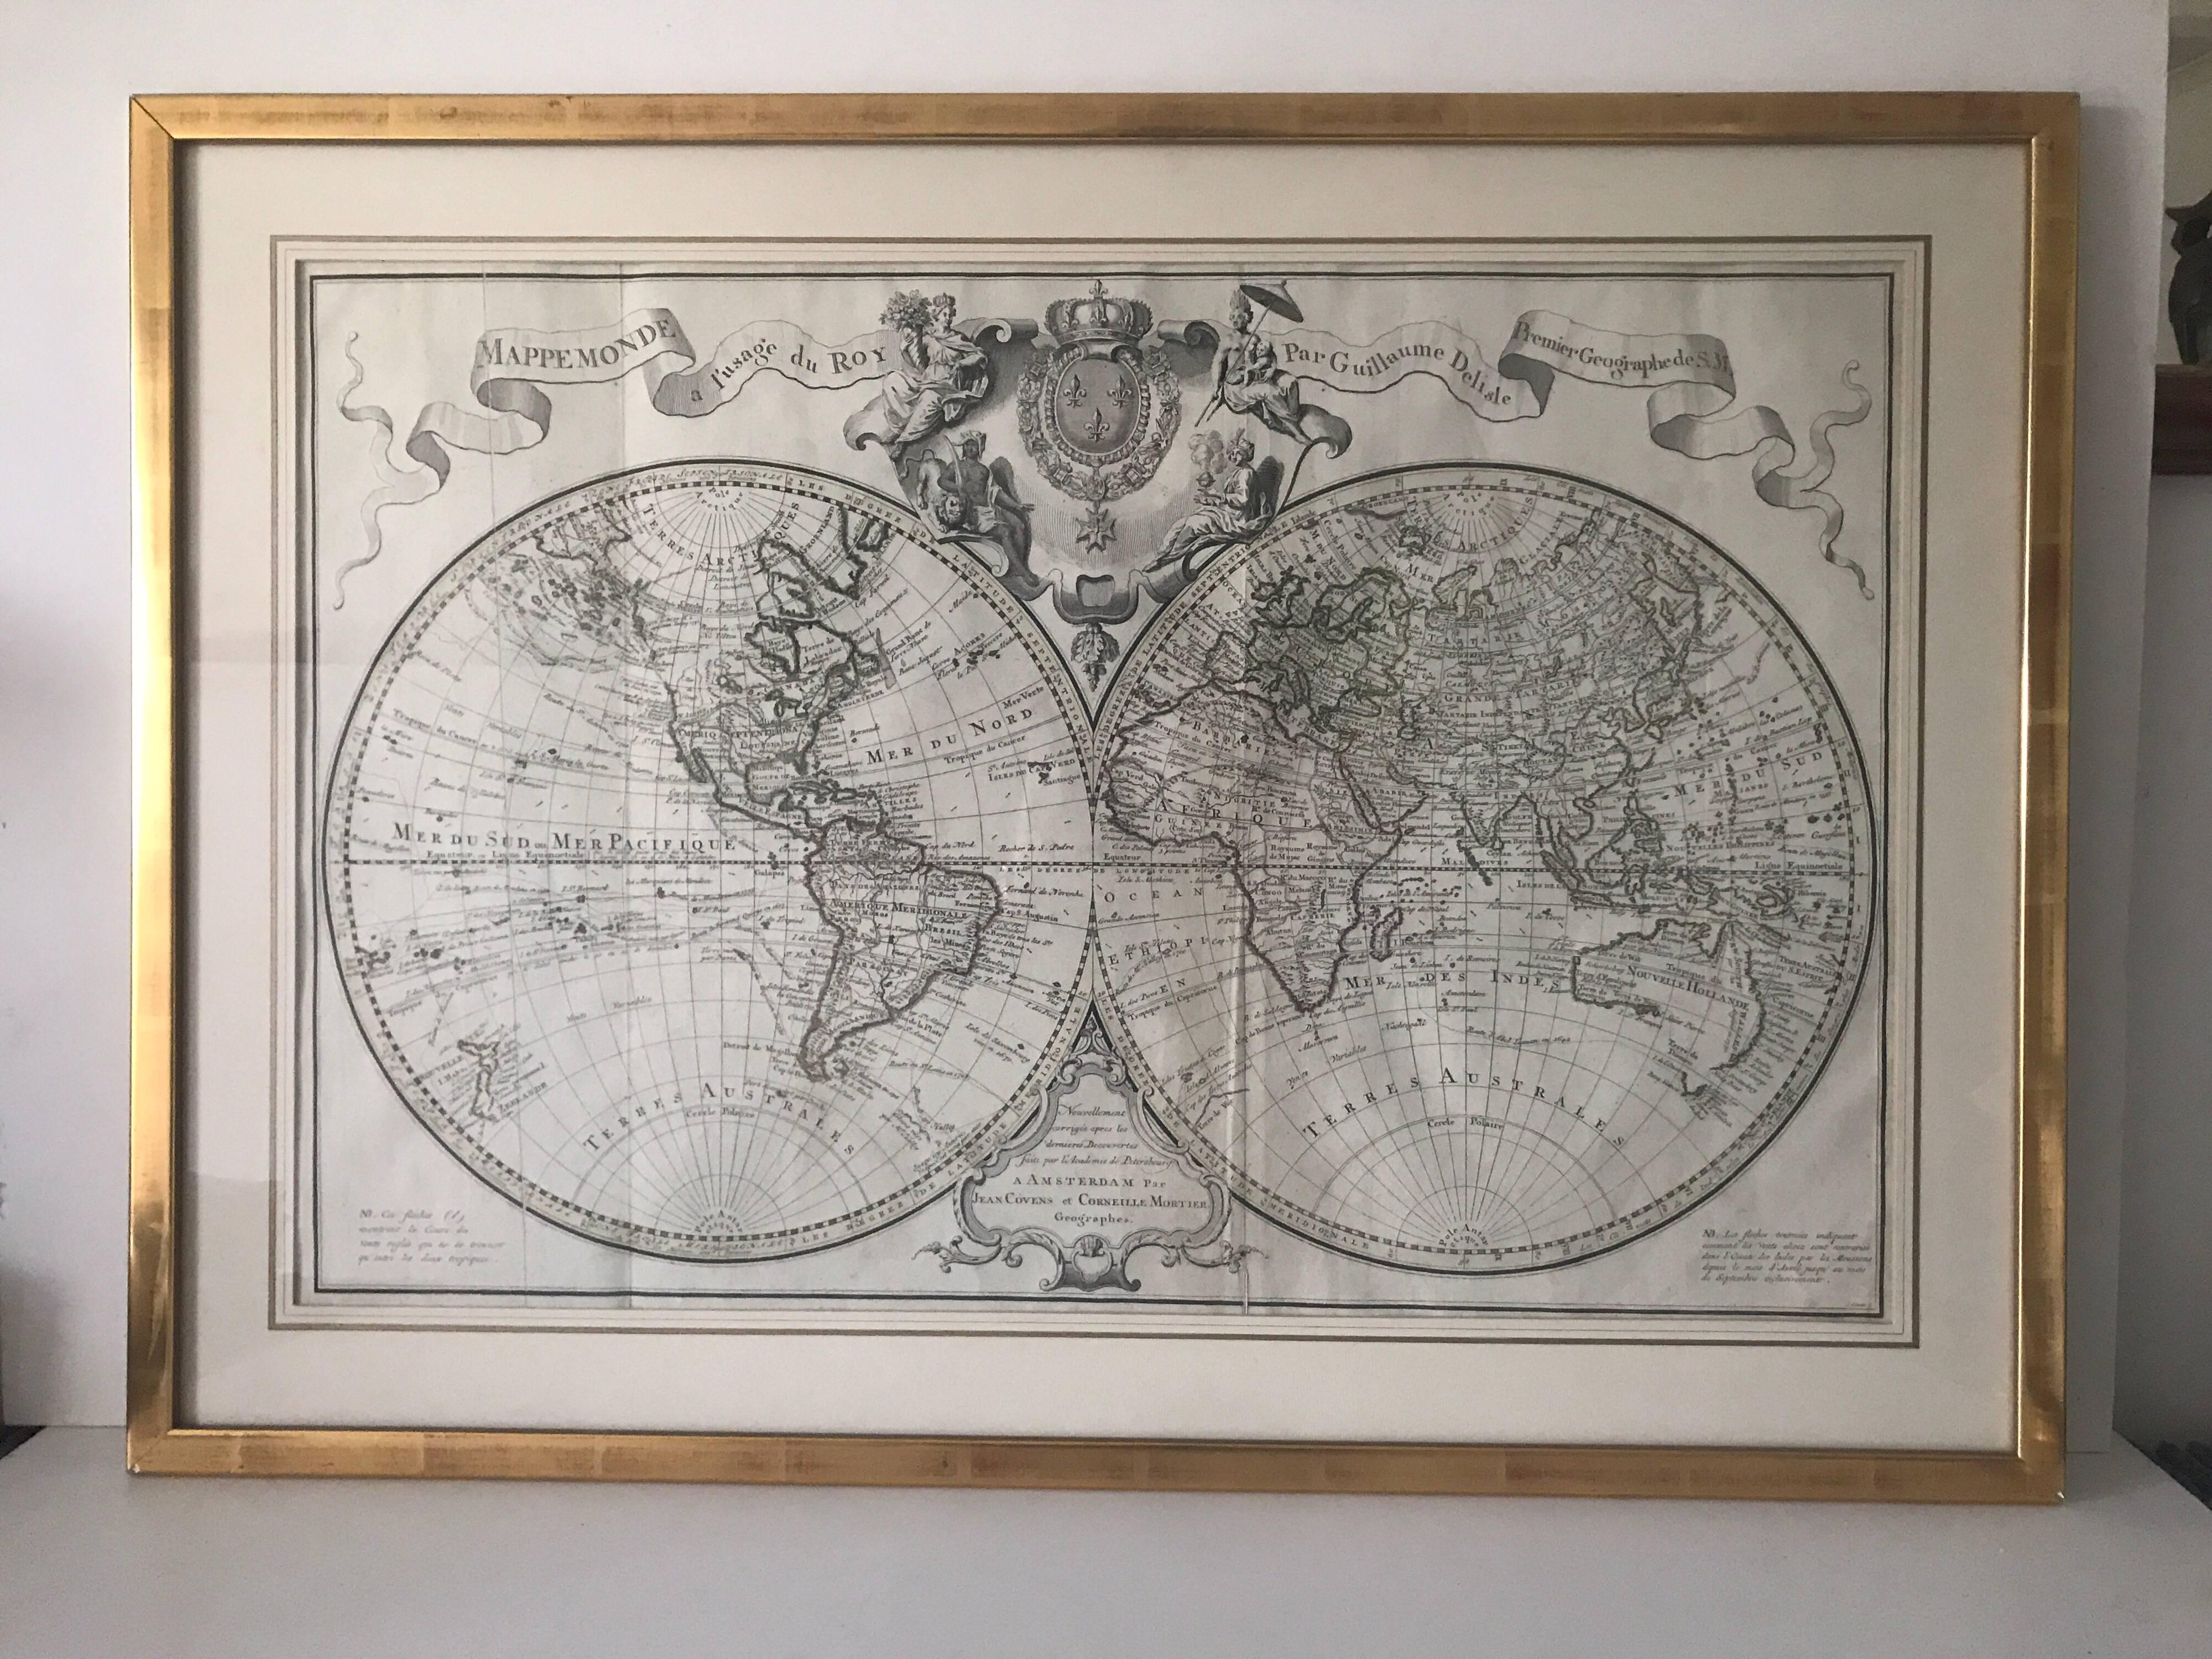 World Map. Delisle, Guillaume - Buache. Mappemonde a l'Usage du Roy par Guillaume Delisle I.er Géographe de S.M. Amsterdam (Covens - Mortier), circa 1730.

Engraved large double-hemisphere map with outline colour, title above the map with the